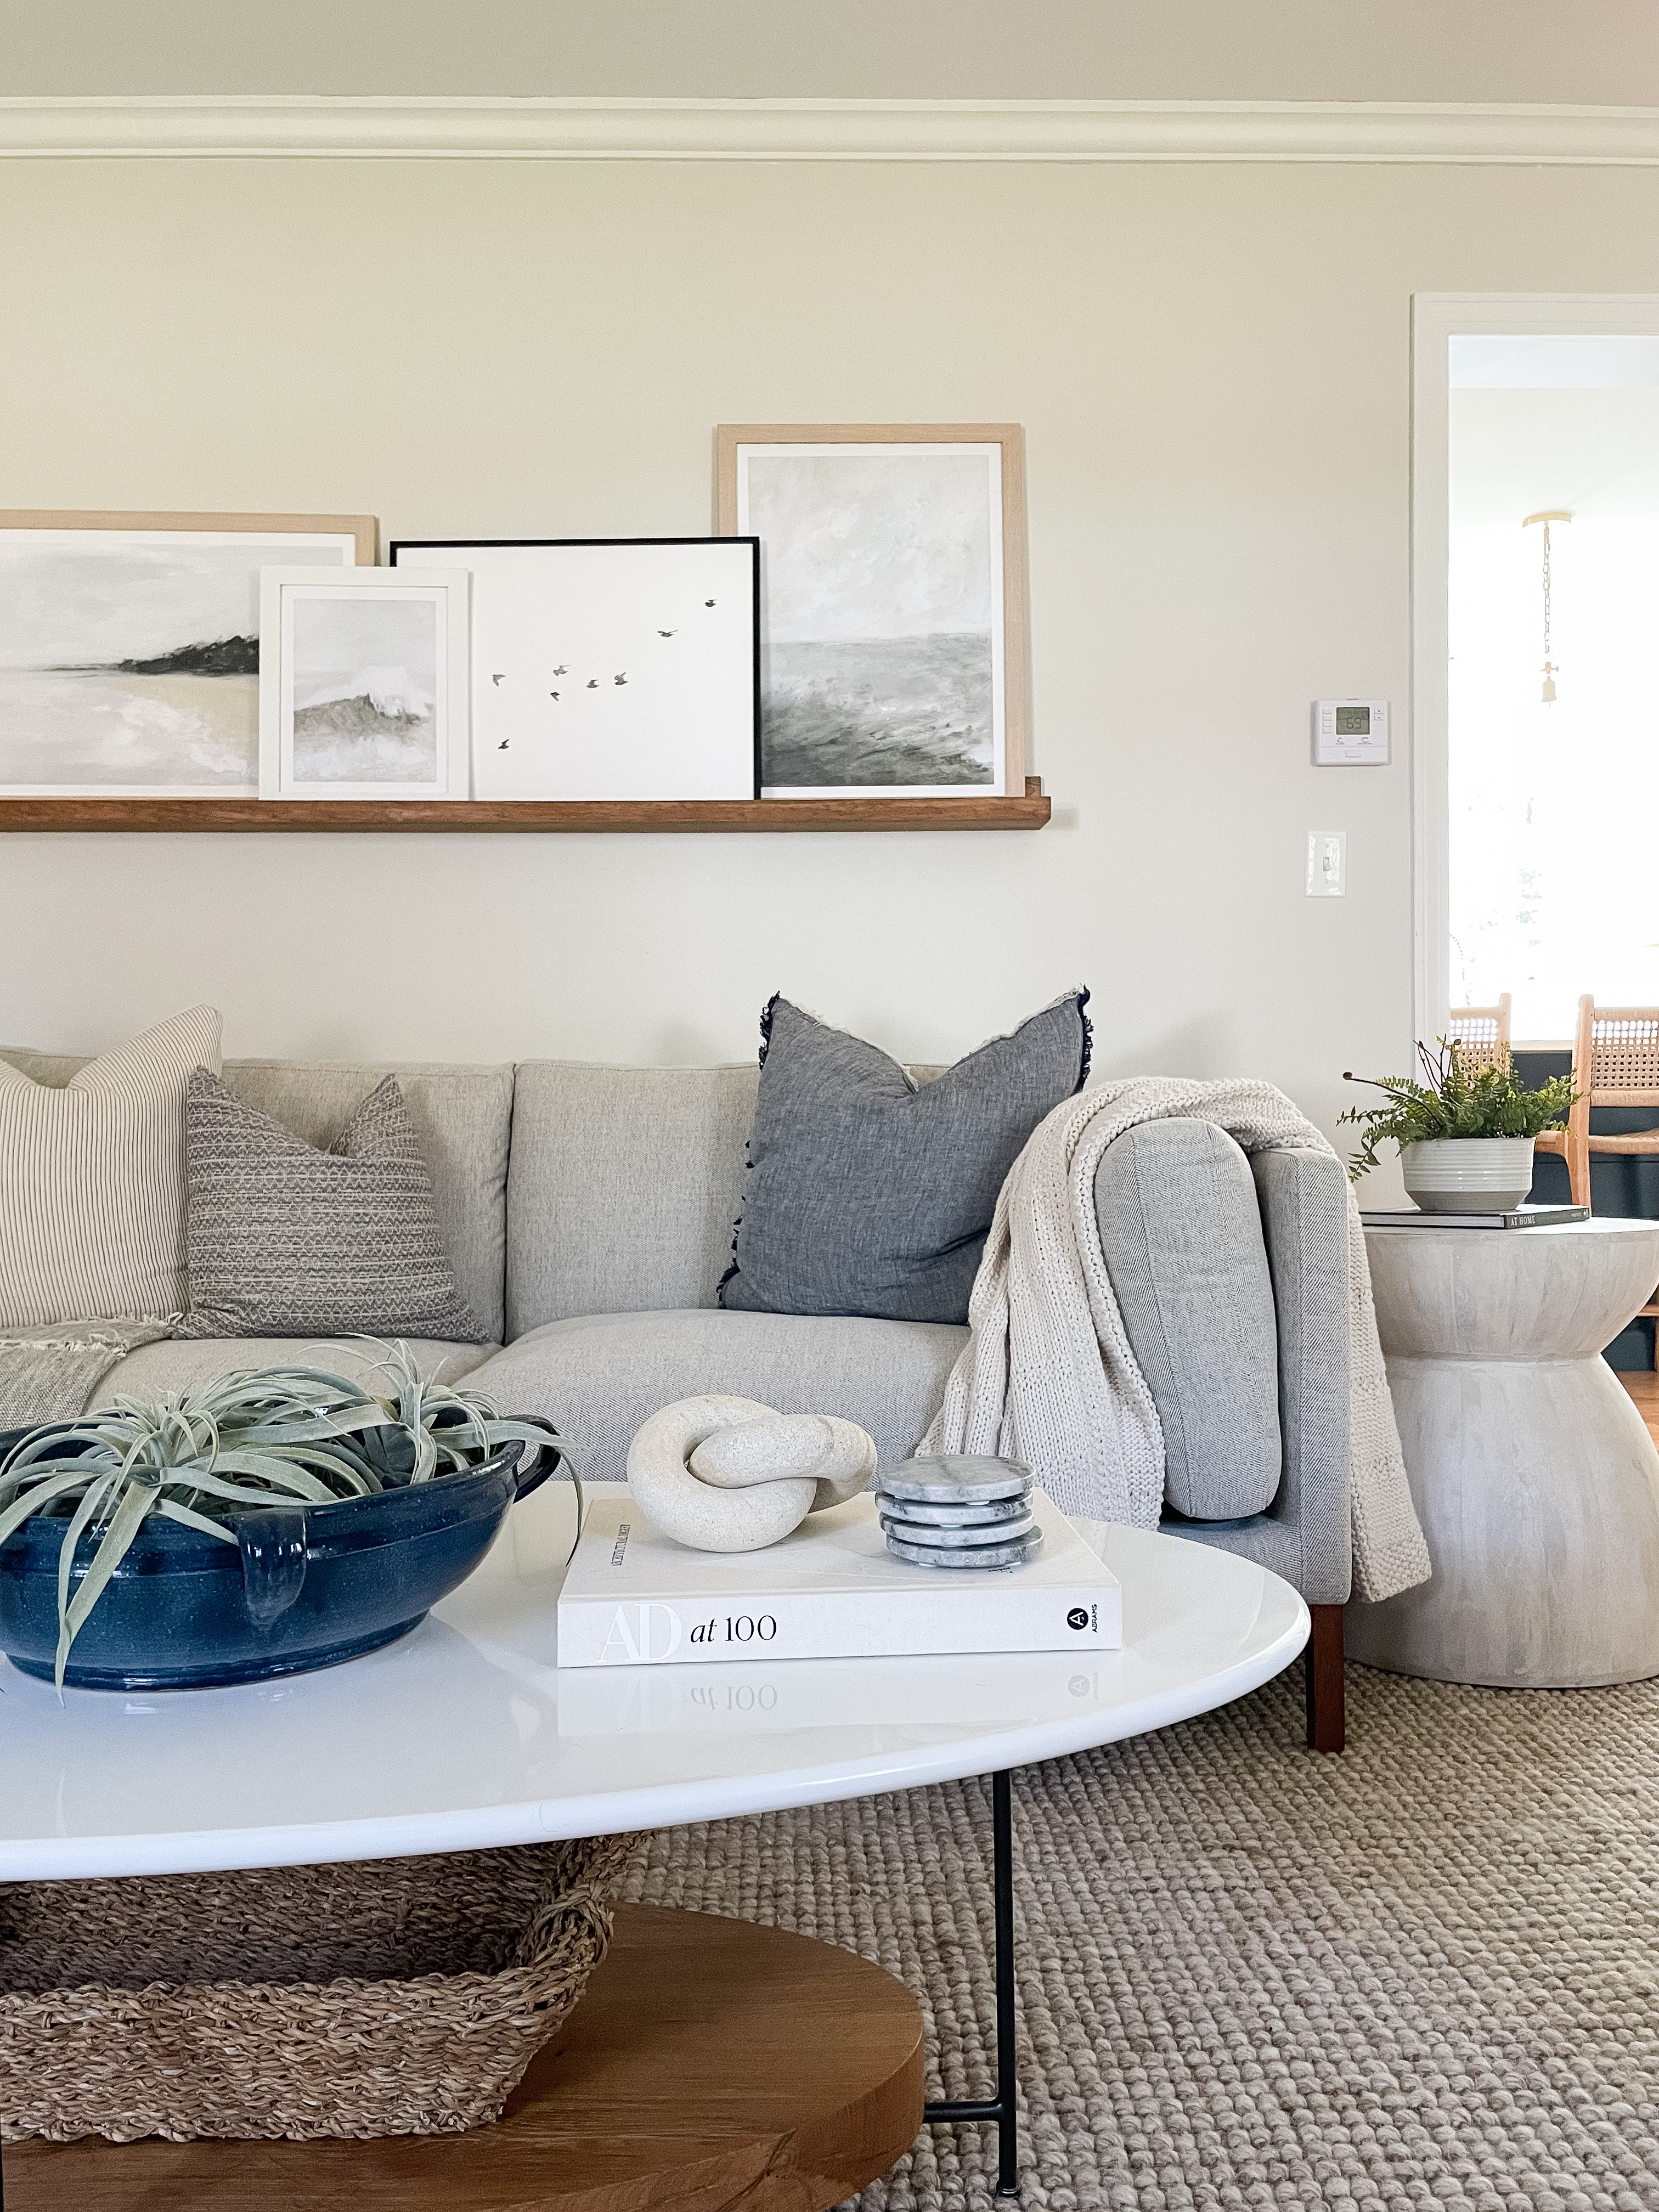 Picture Frame Arrangements: A living room shelf display